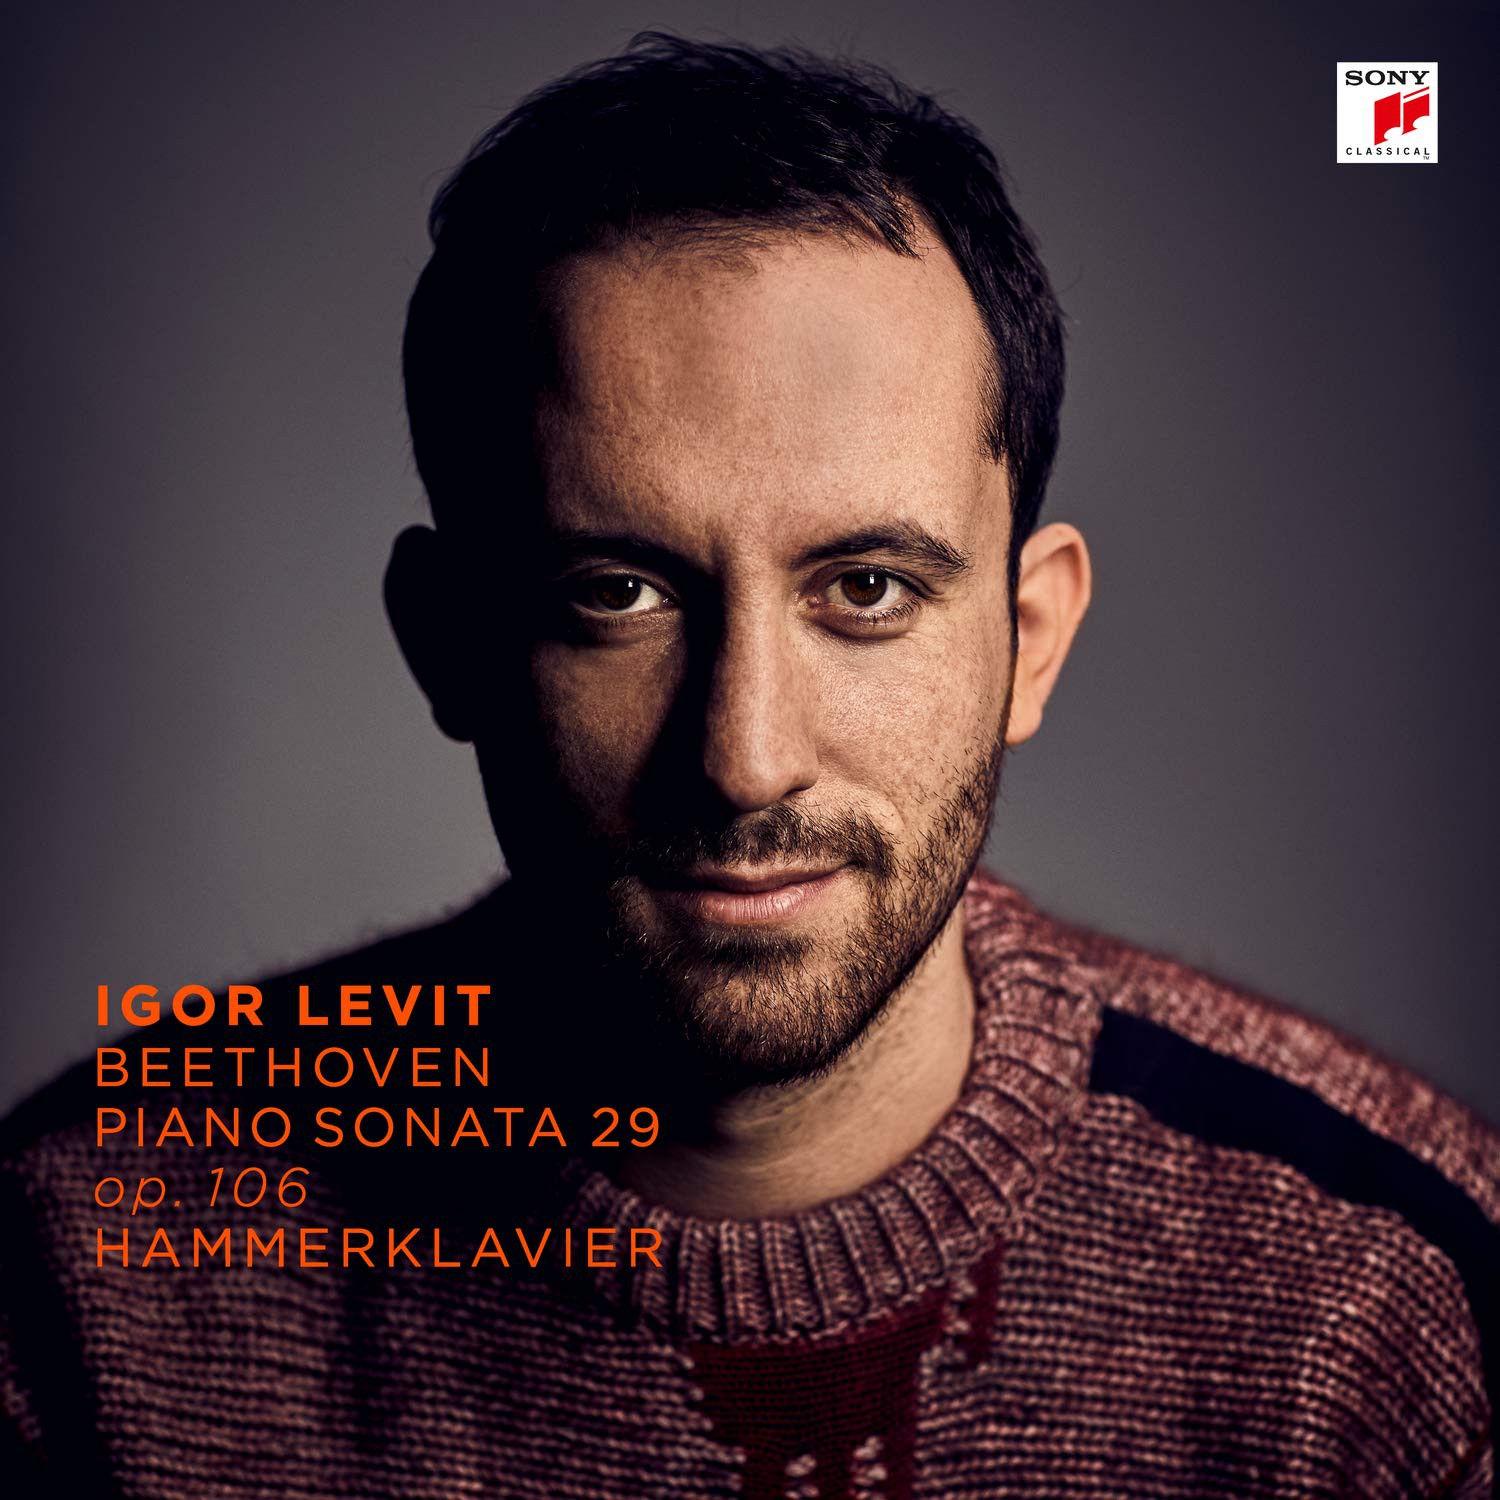 Igor Levit – Piano Sonata 29 Op.106 Hammerklavier